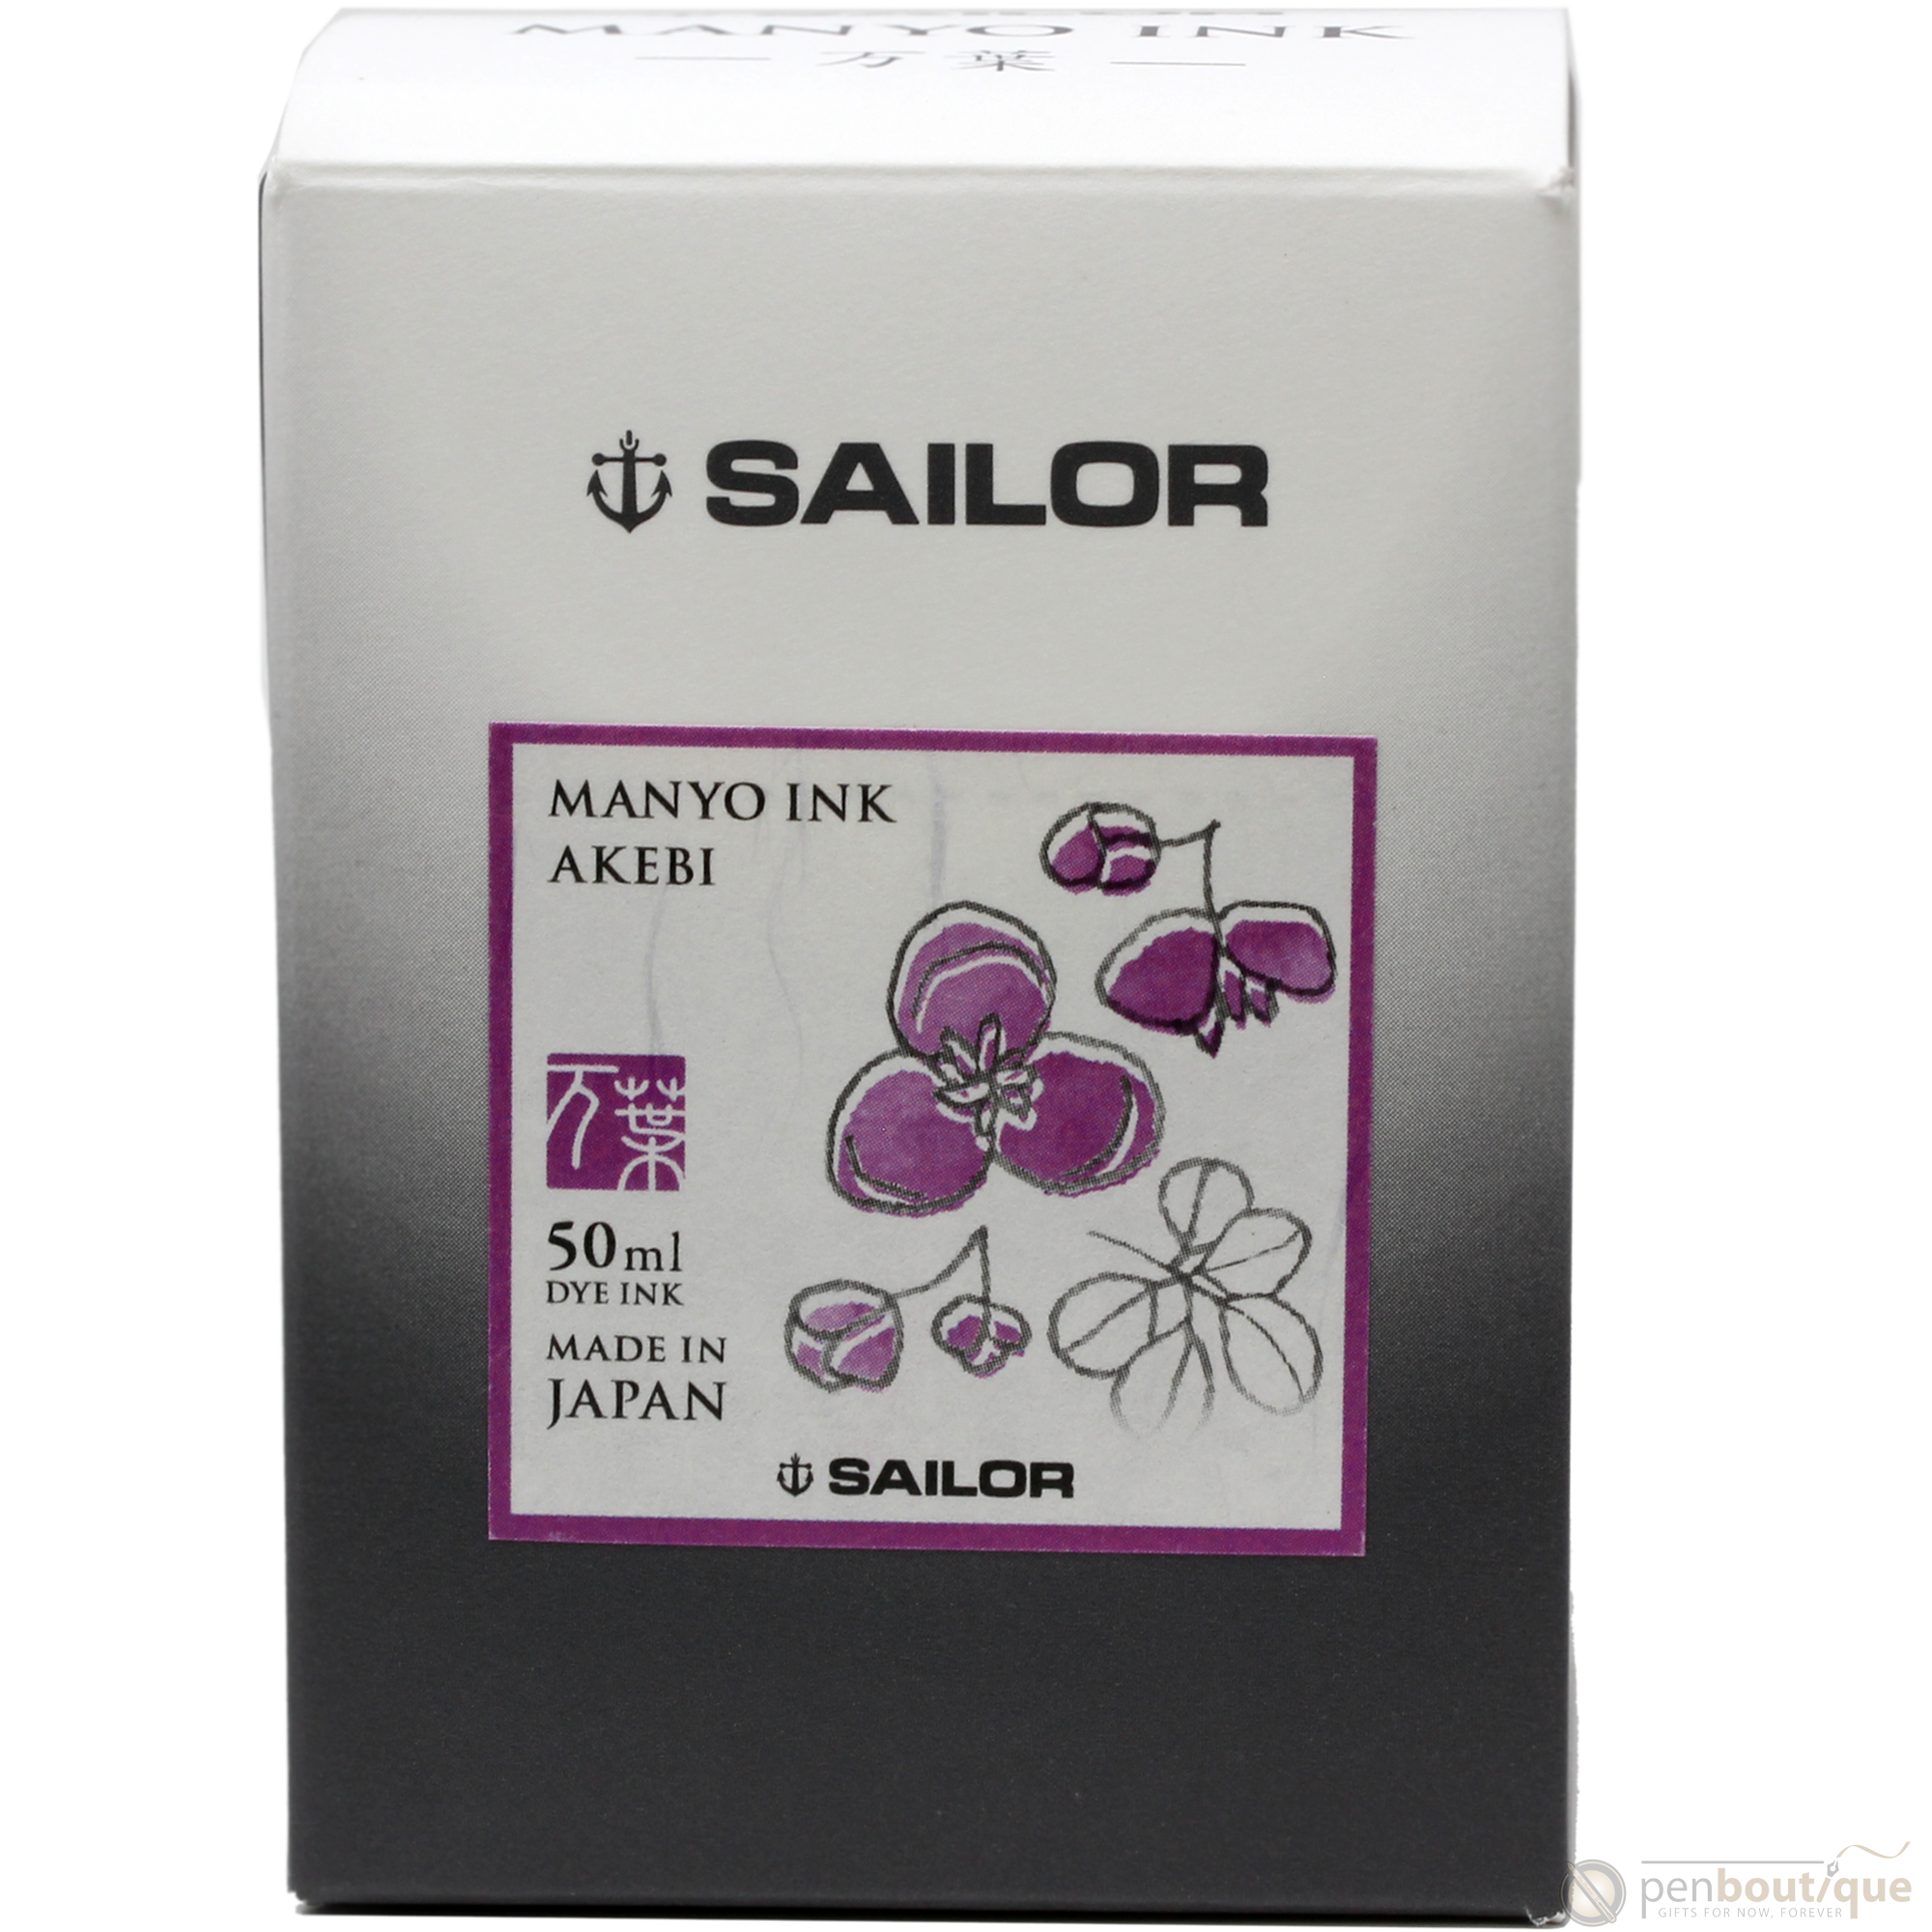 Sailor Manyo Ink Bottle - Akebi - 50ml-Pen Boutique Ltd